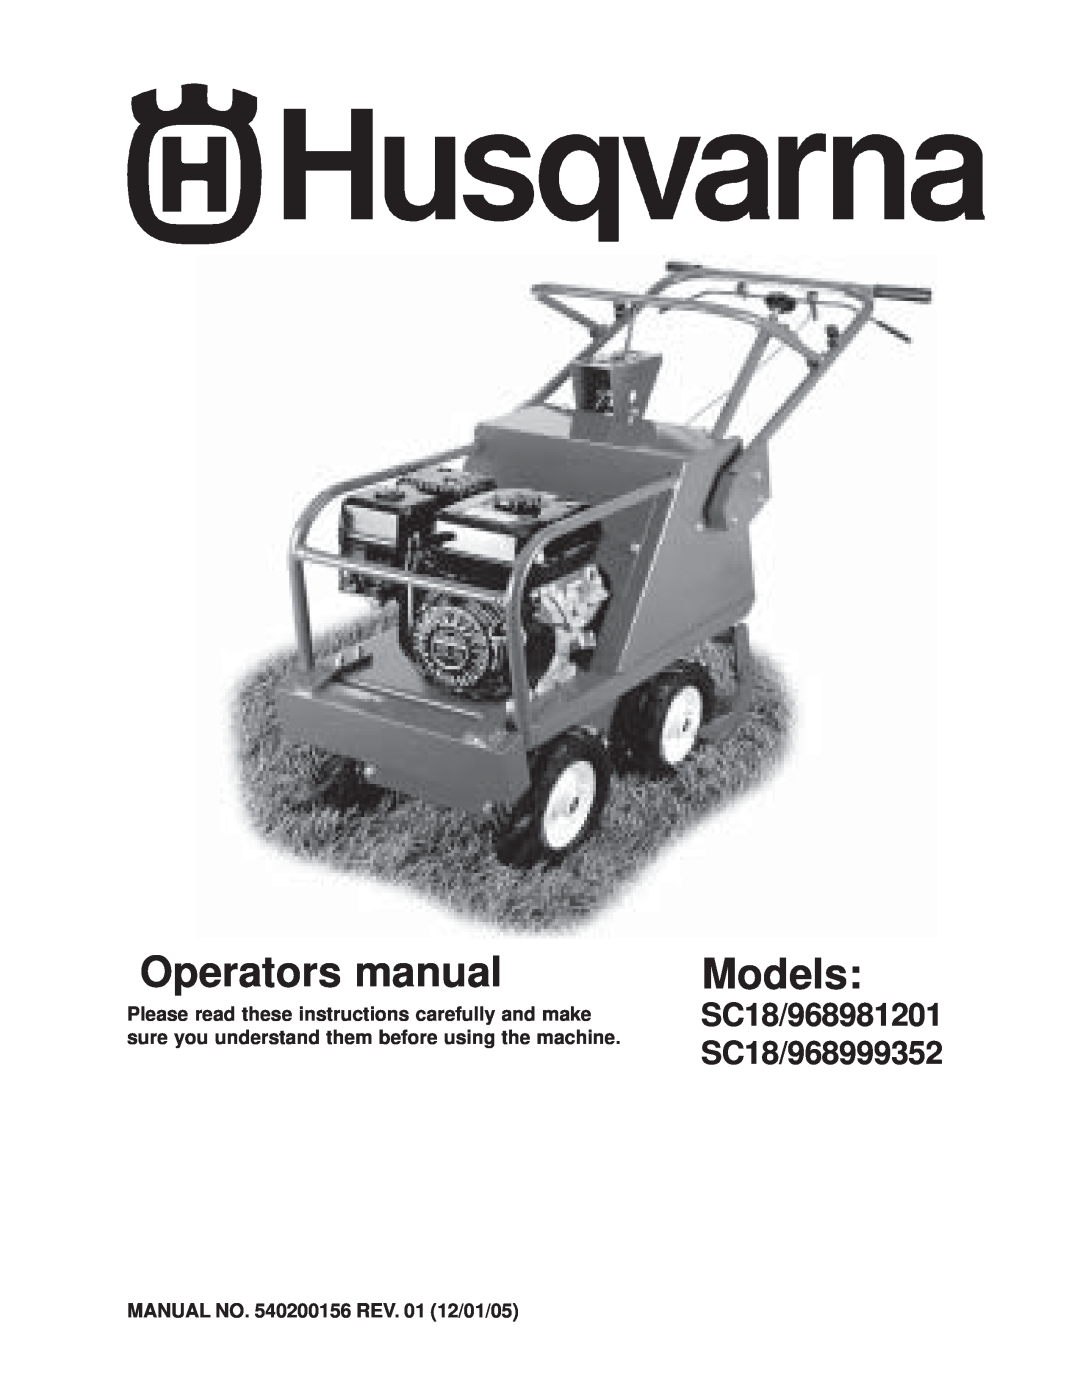 Husqvarna manual Operators manual, Models, SC18/968981201 SC18/968999352 